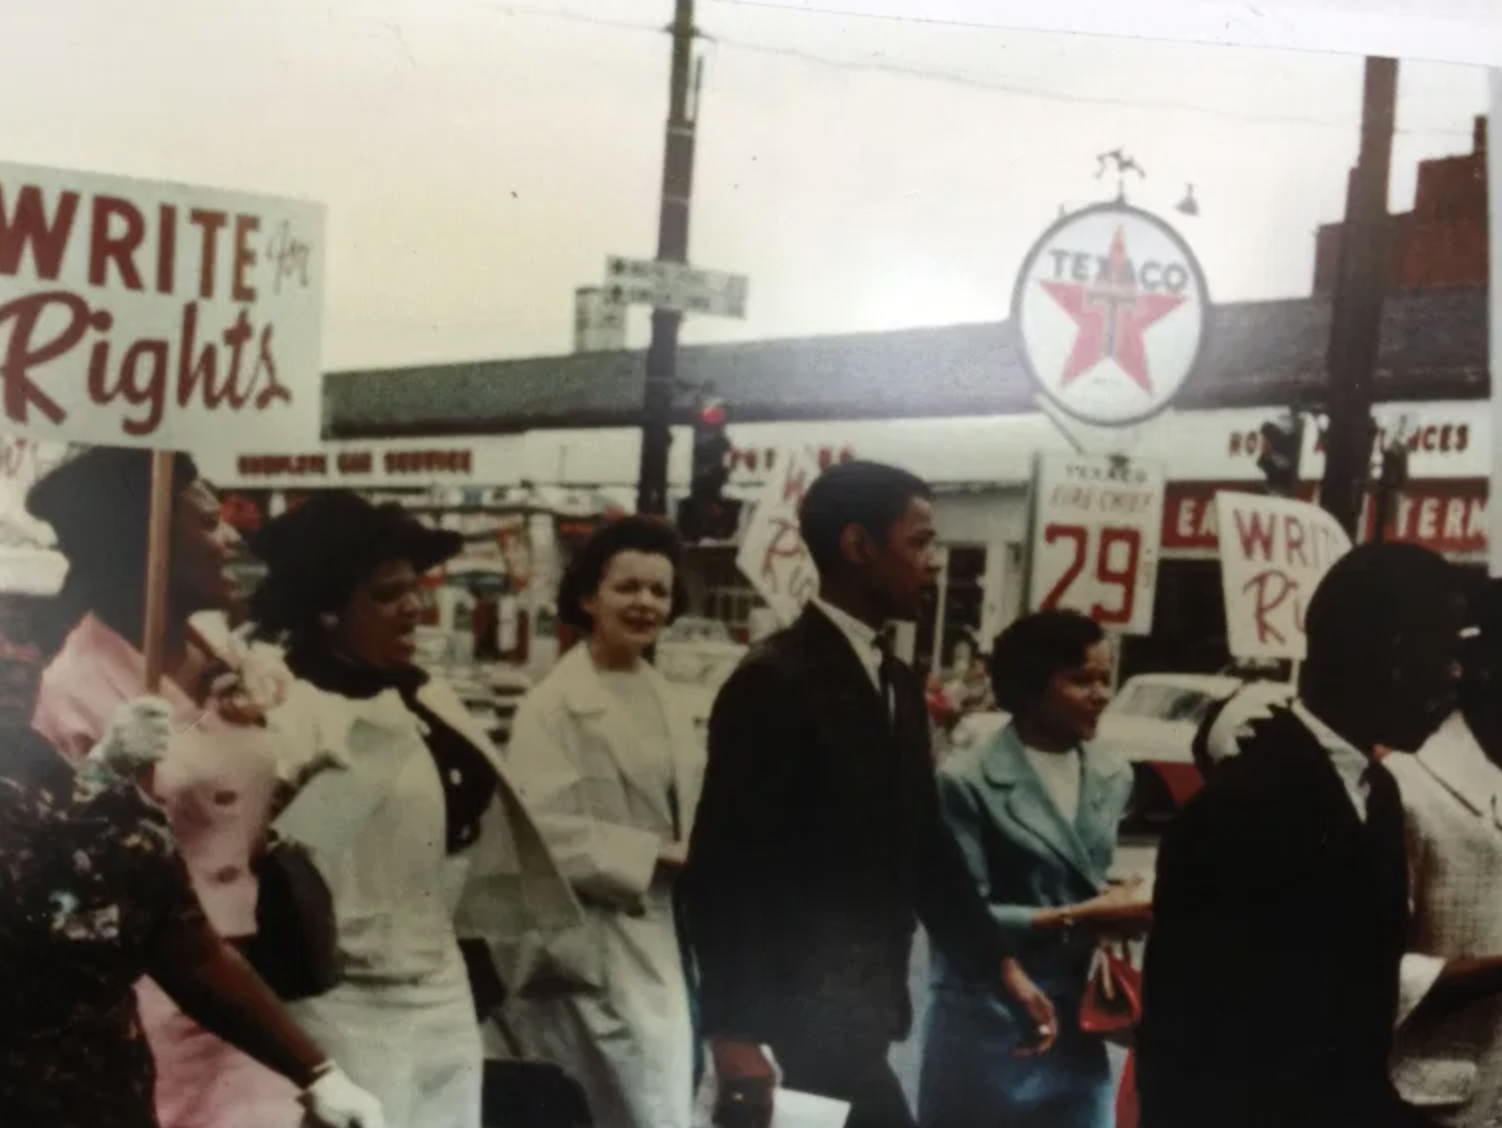 Washington County Civil Rights Demonstration, 1960s  Source:  NAACP Washington County